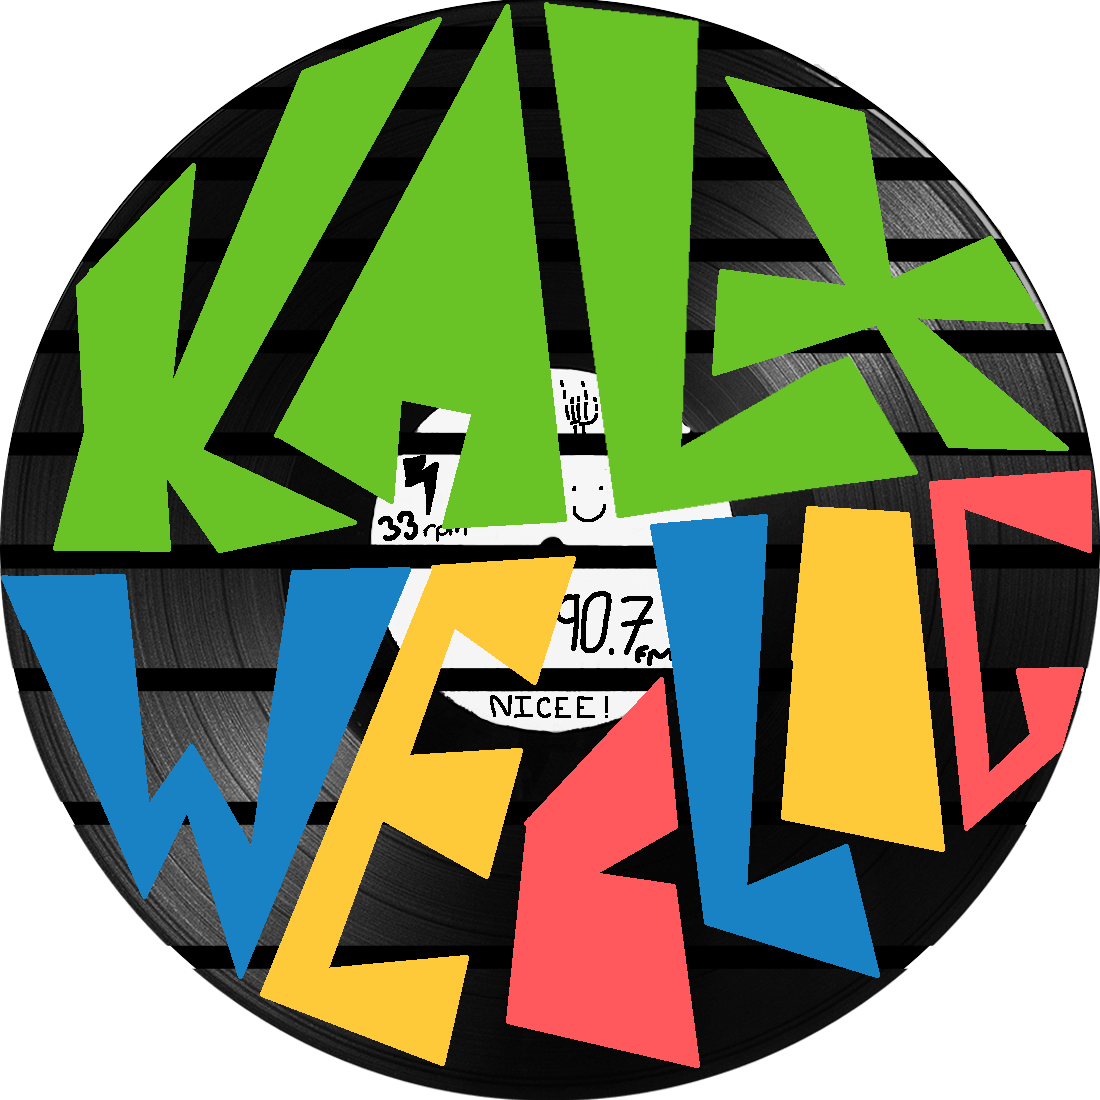 KALX Weblog logo